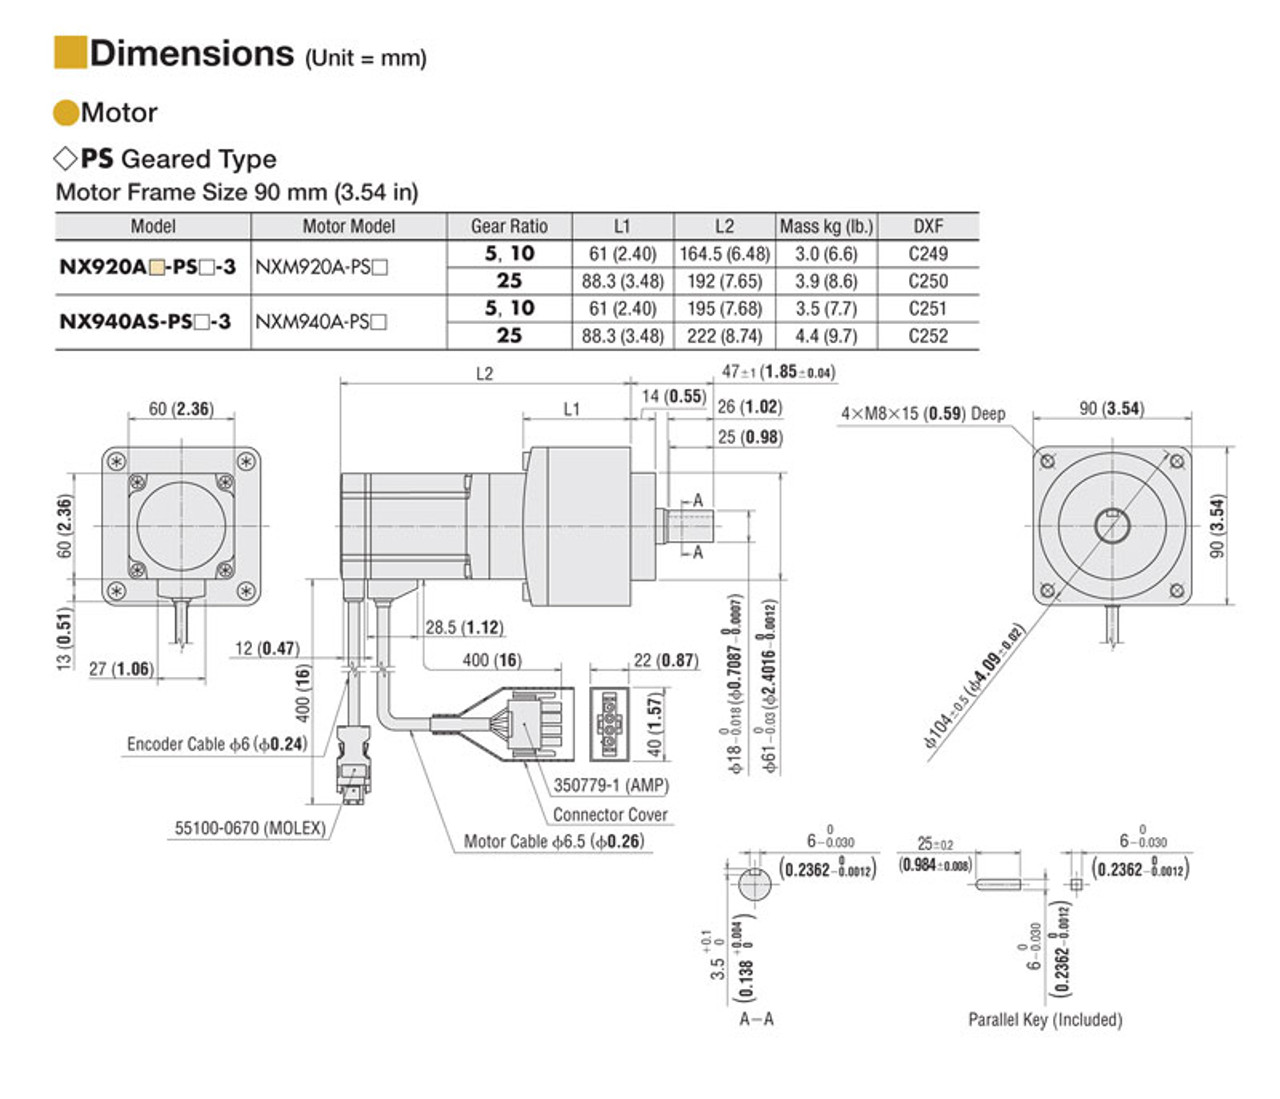 NX920AA-PS25-3 - Dimensions